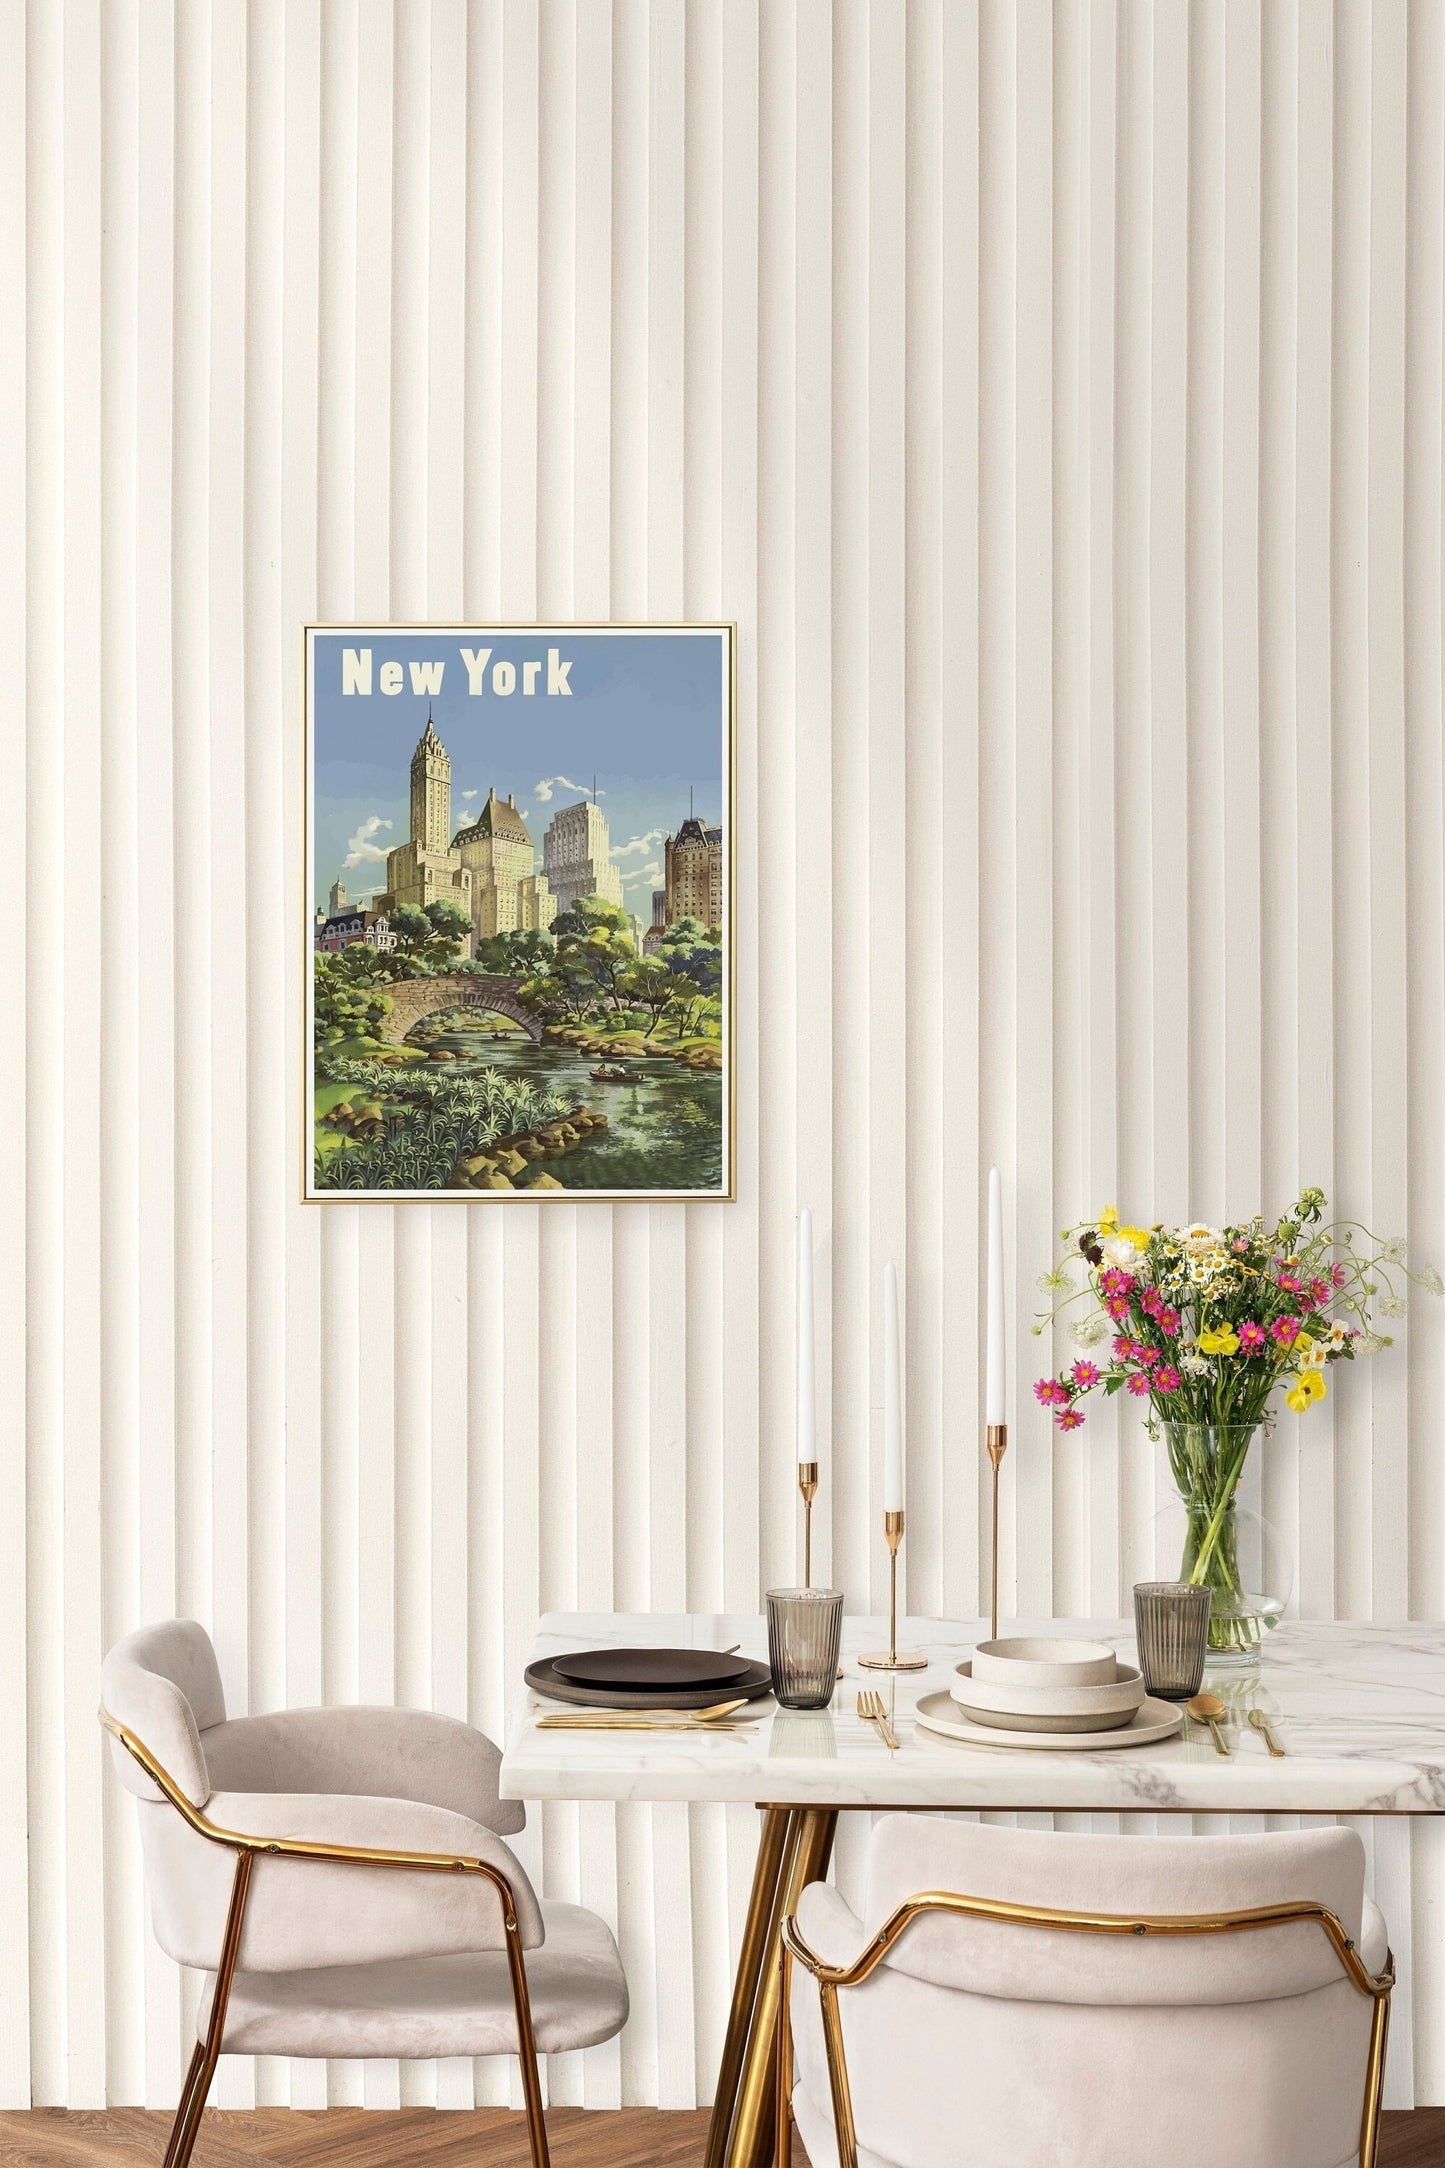 Vintage New York Travel Poster Print Wall Hanging Decor